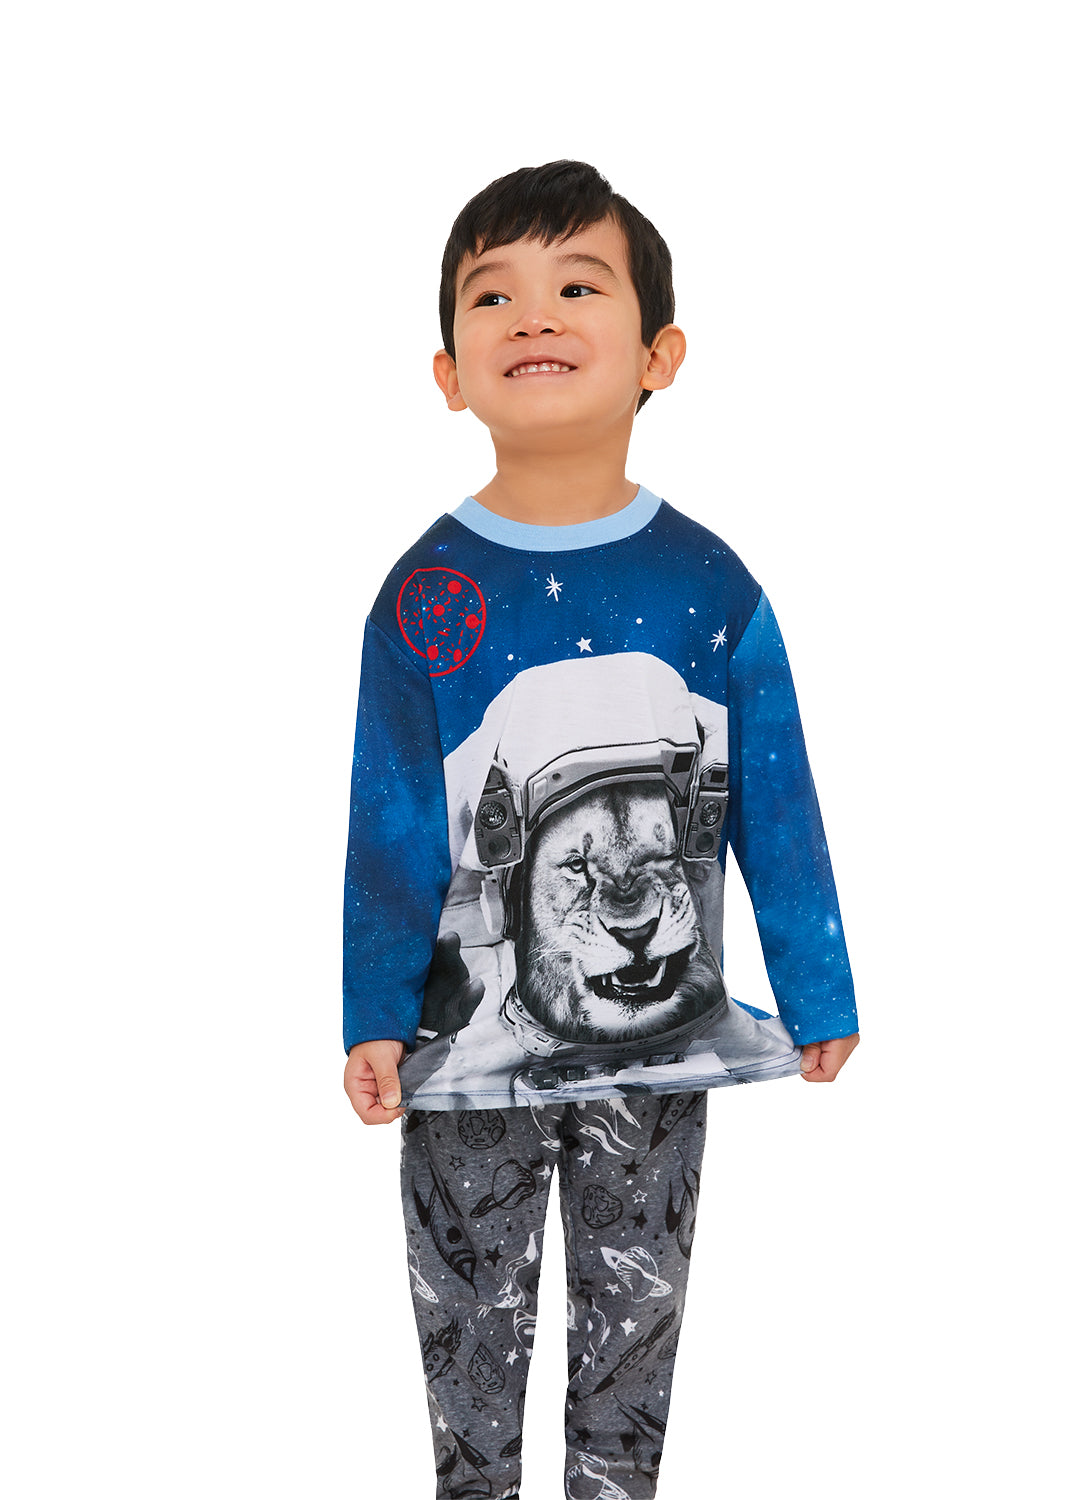 Kid wearing Astronaut Pajama Set in navy colour